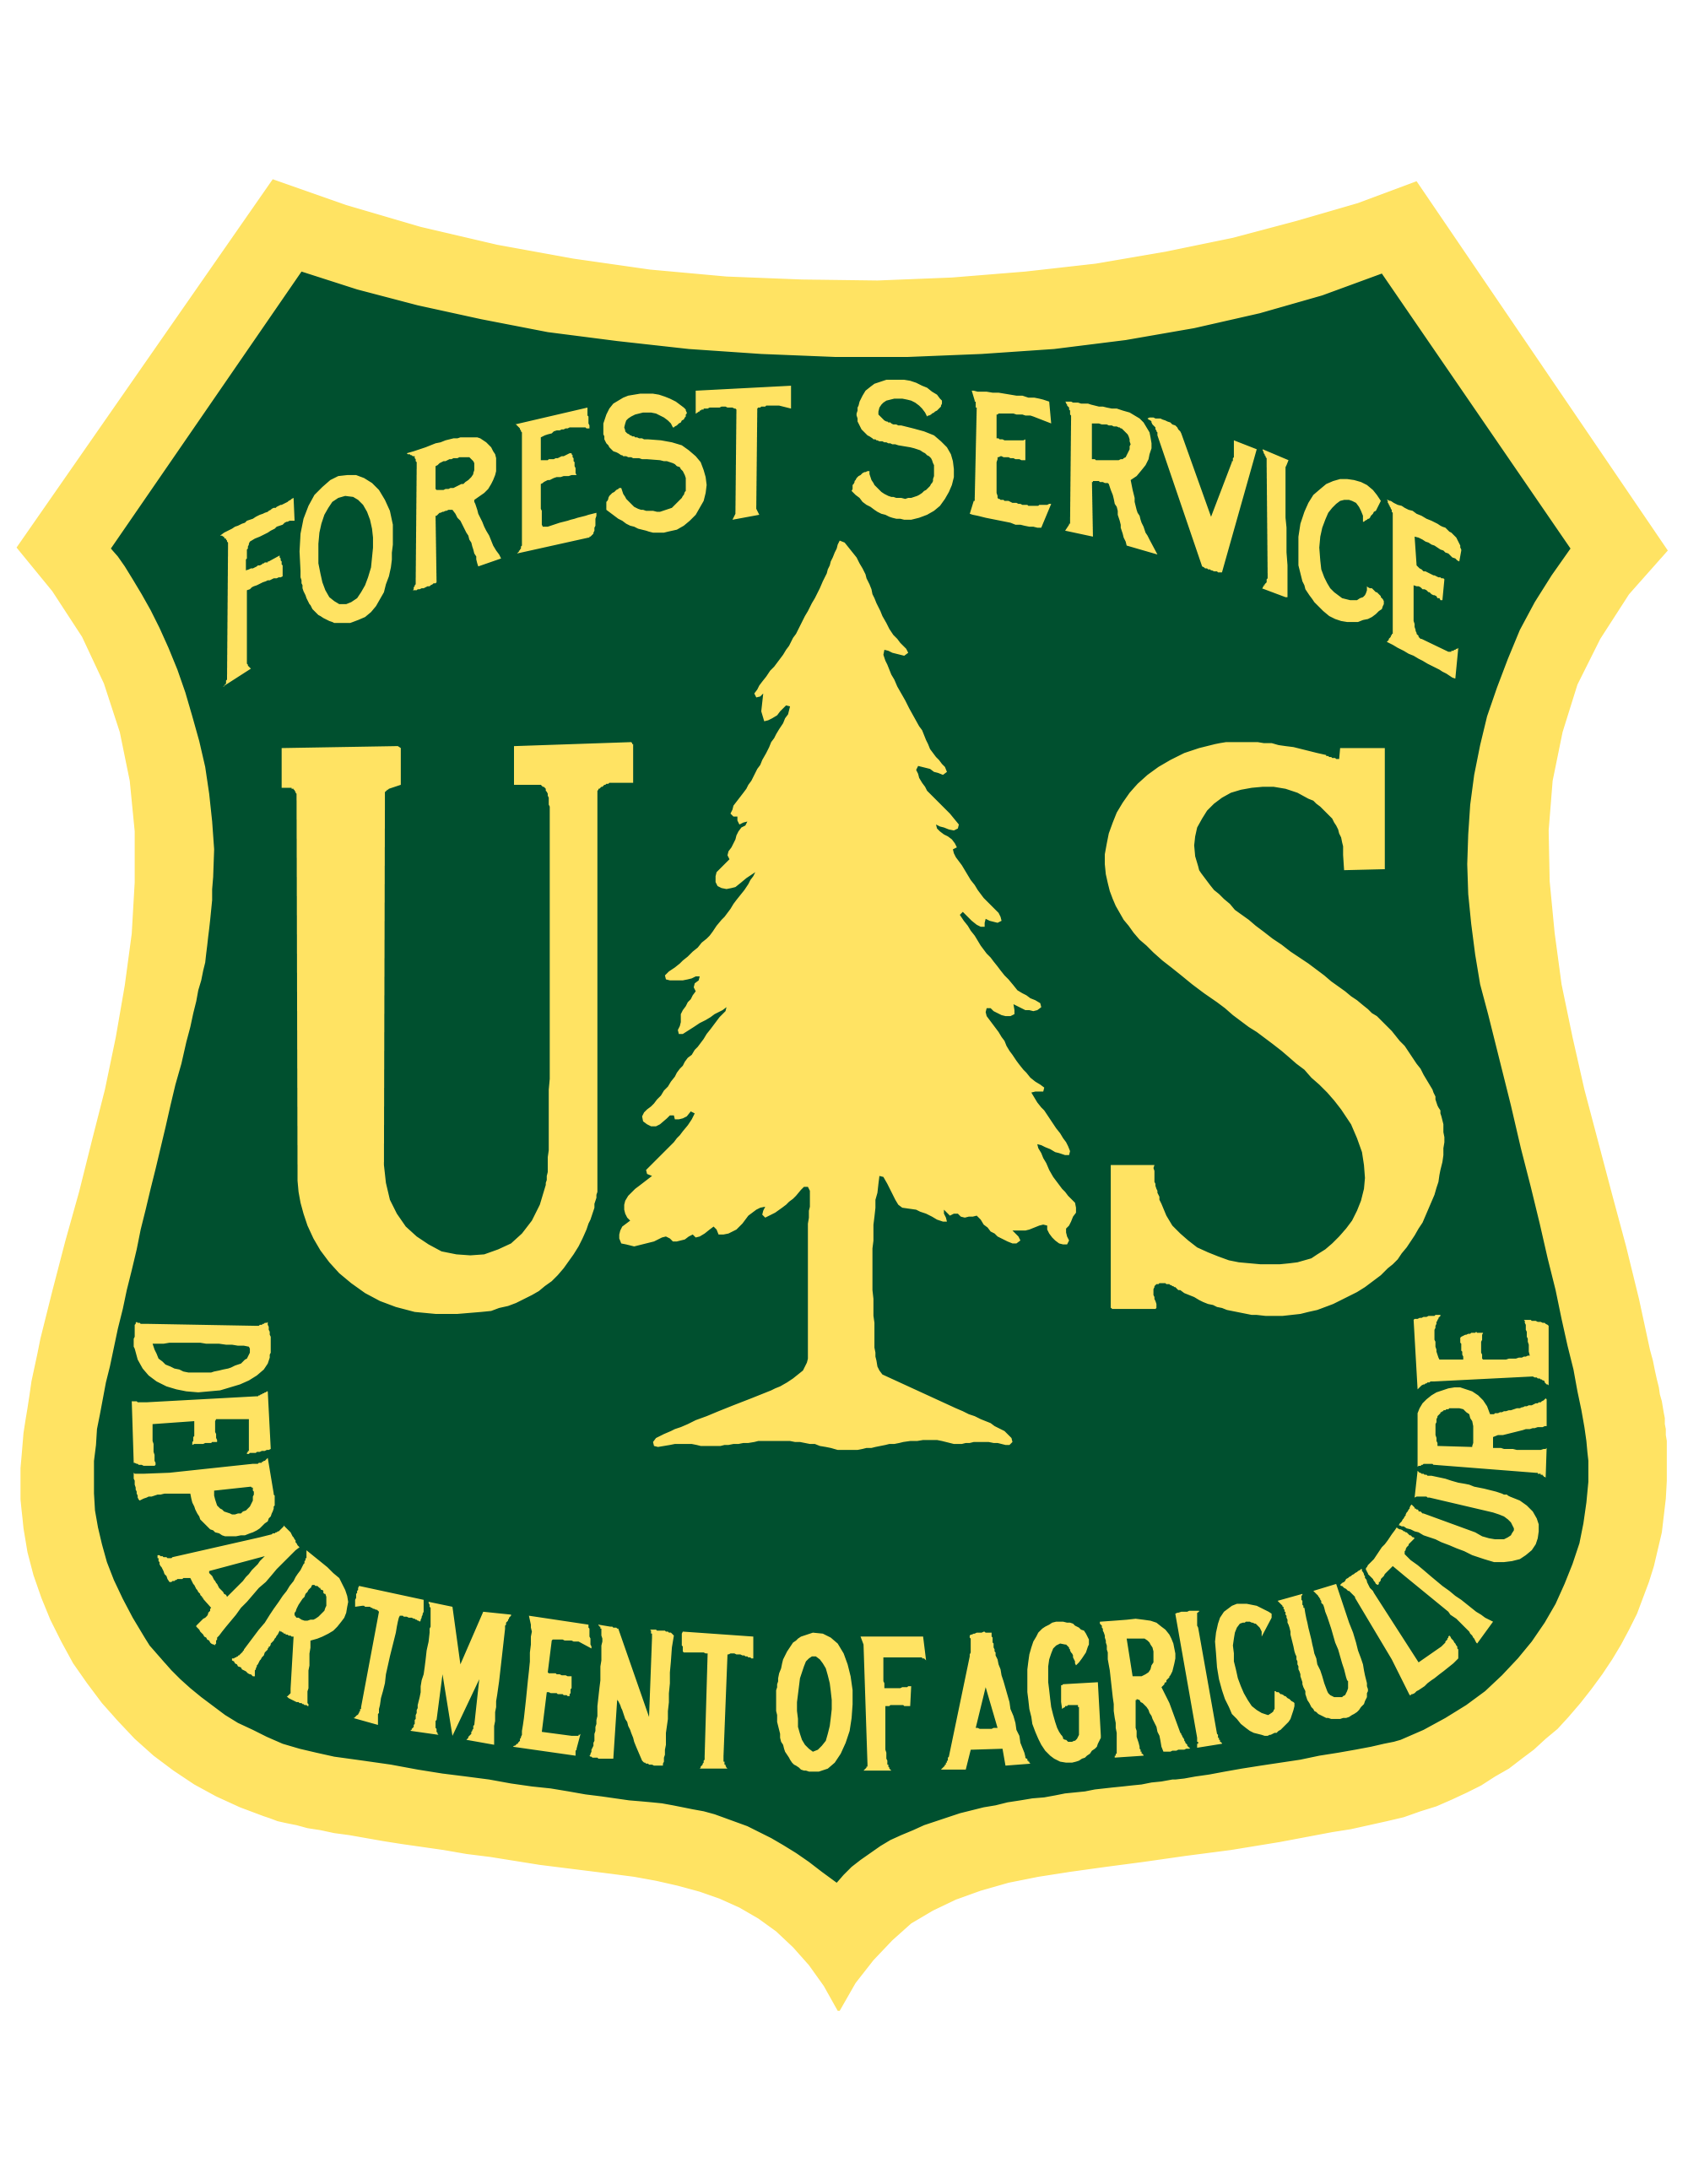 US Forest Service shield logo